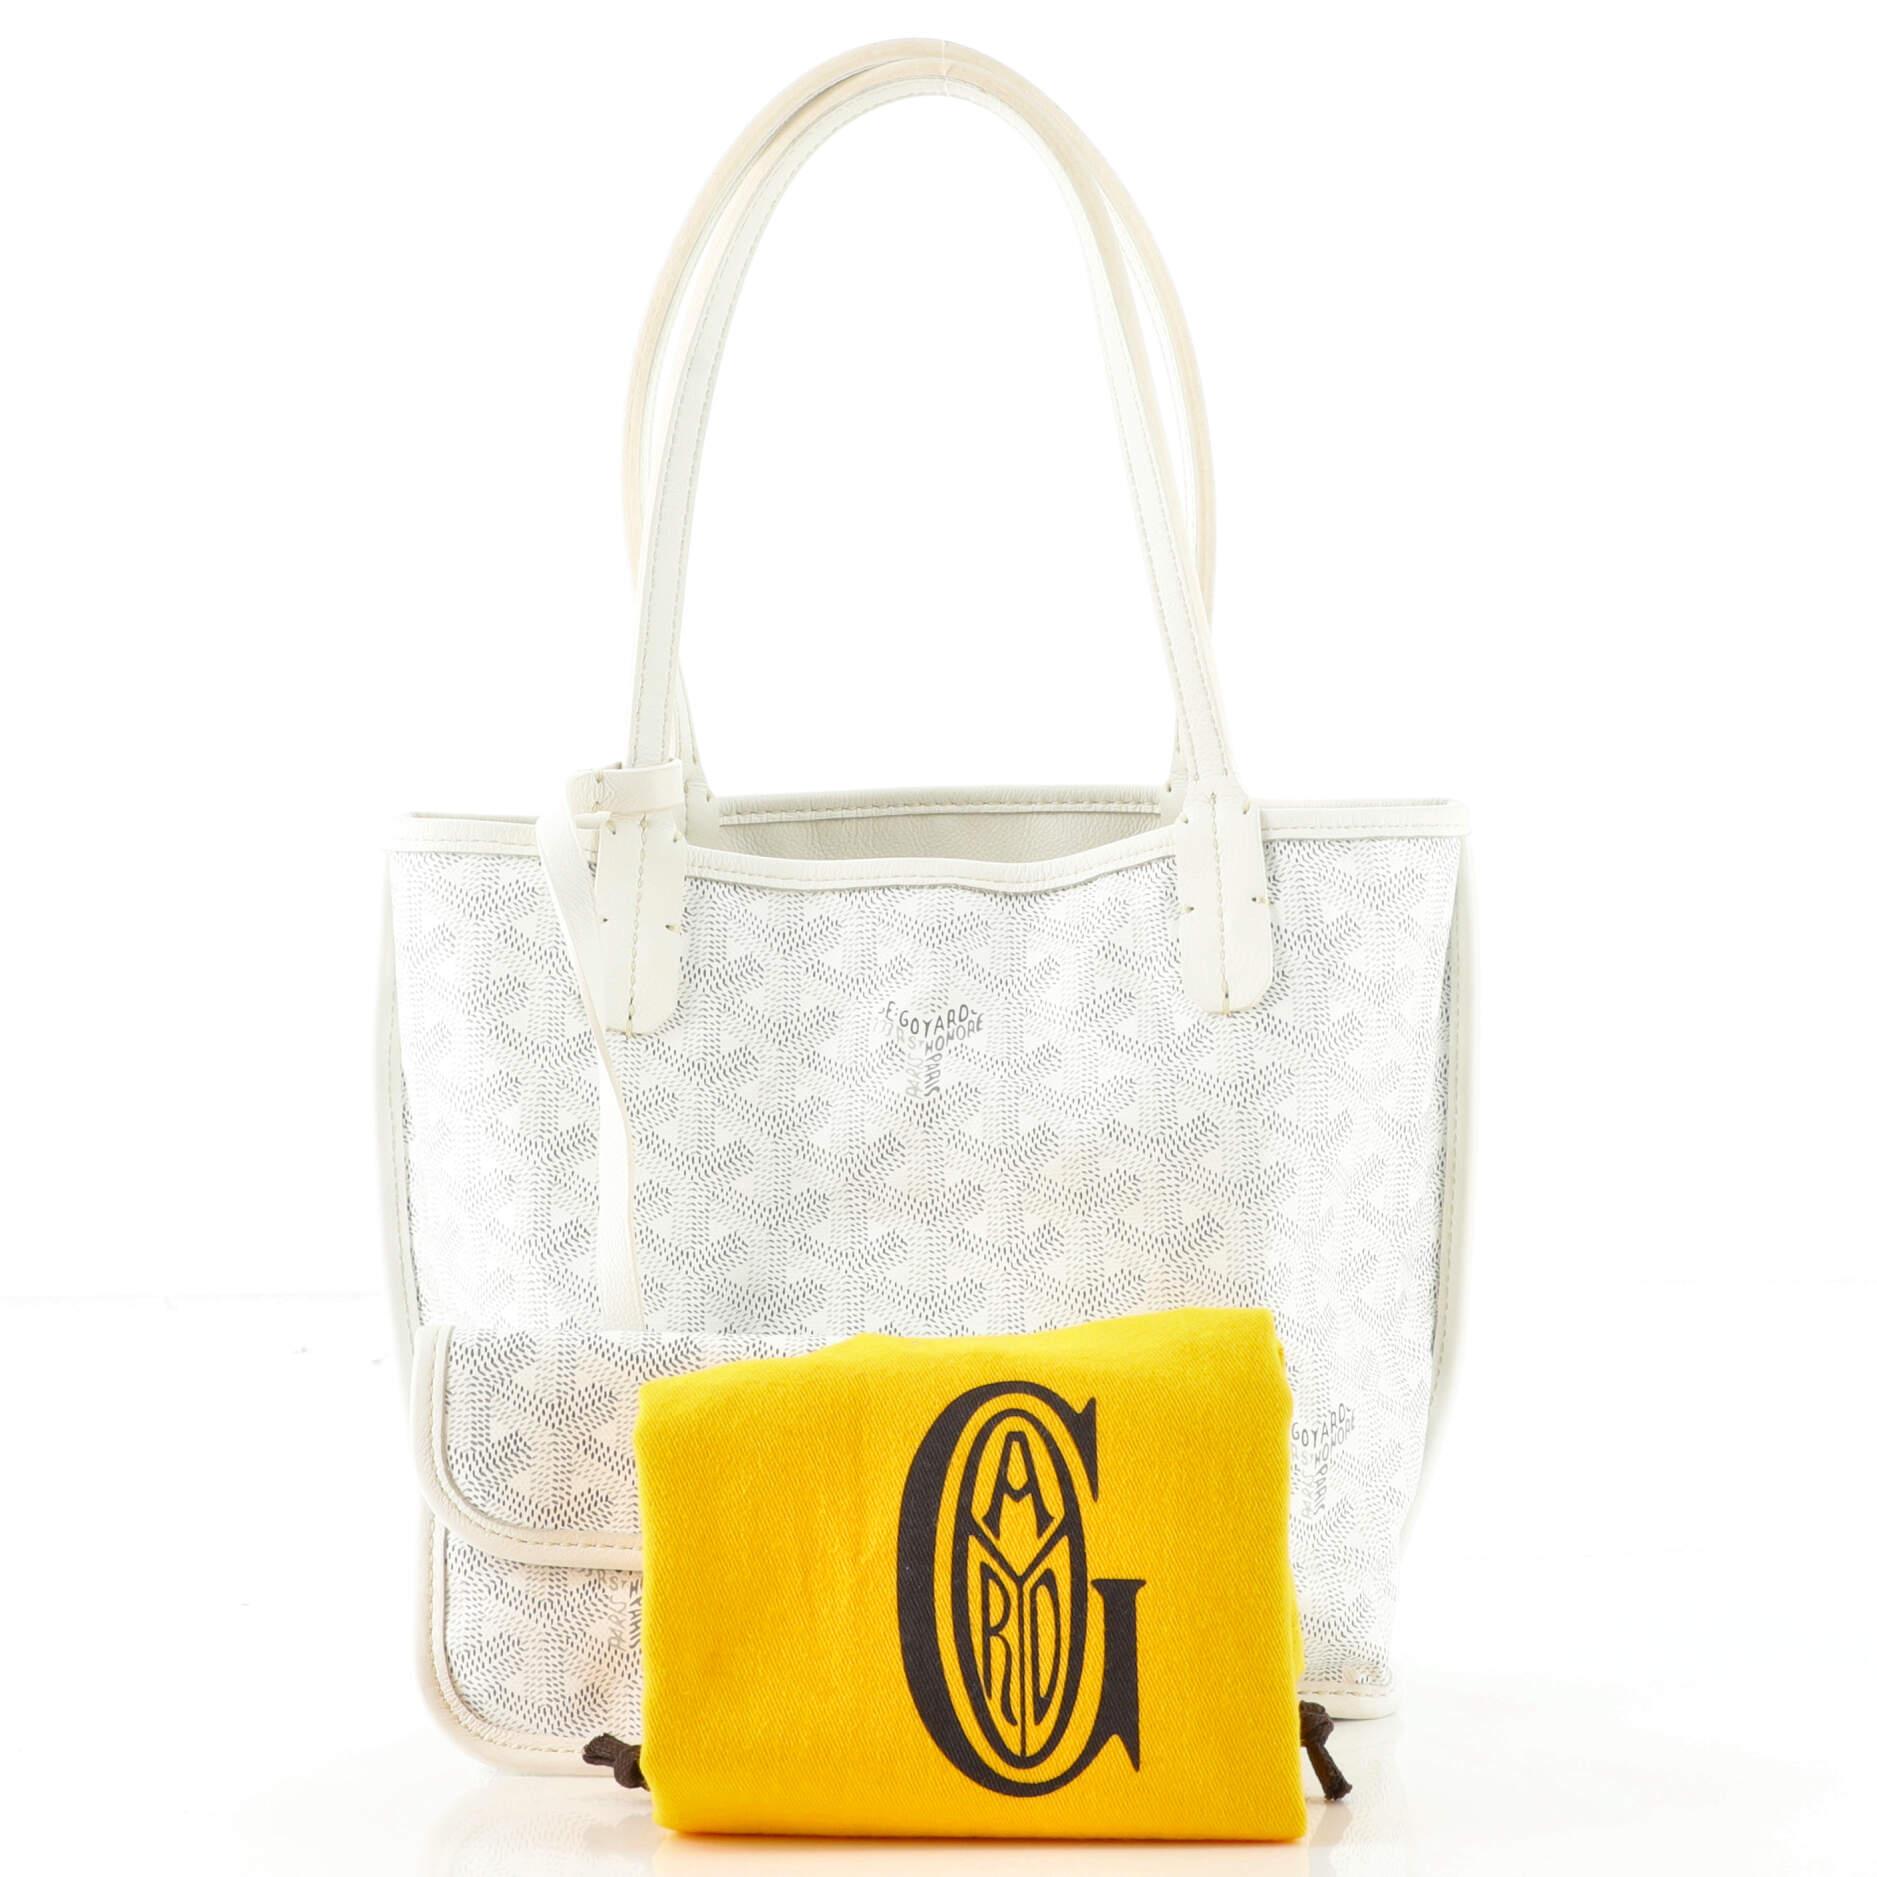 Goyard Anjou Mini - For Sale on 1stDibs  anjou mini bag price, goyard  anjou mini price, goyard small bag price